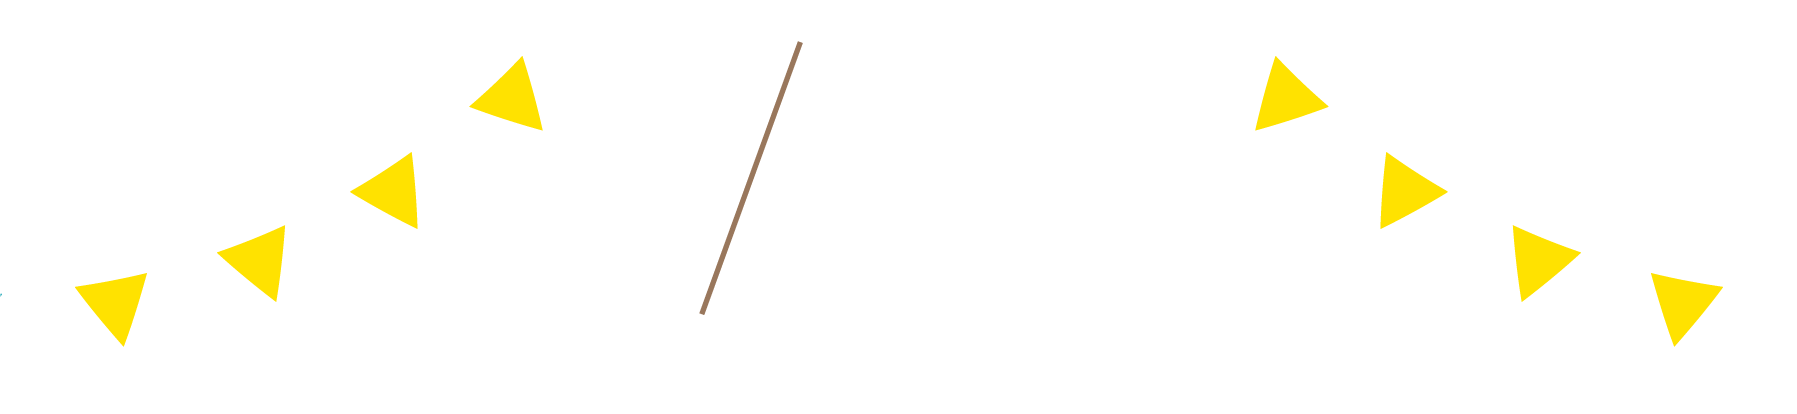 60th ANNIVERSARY